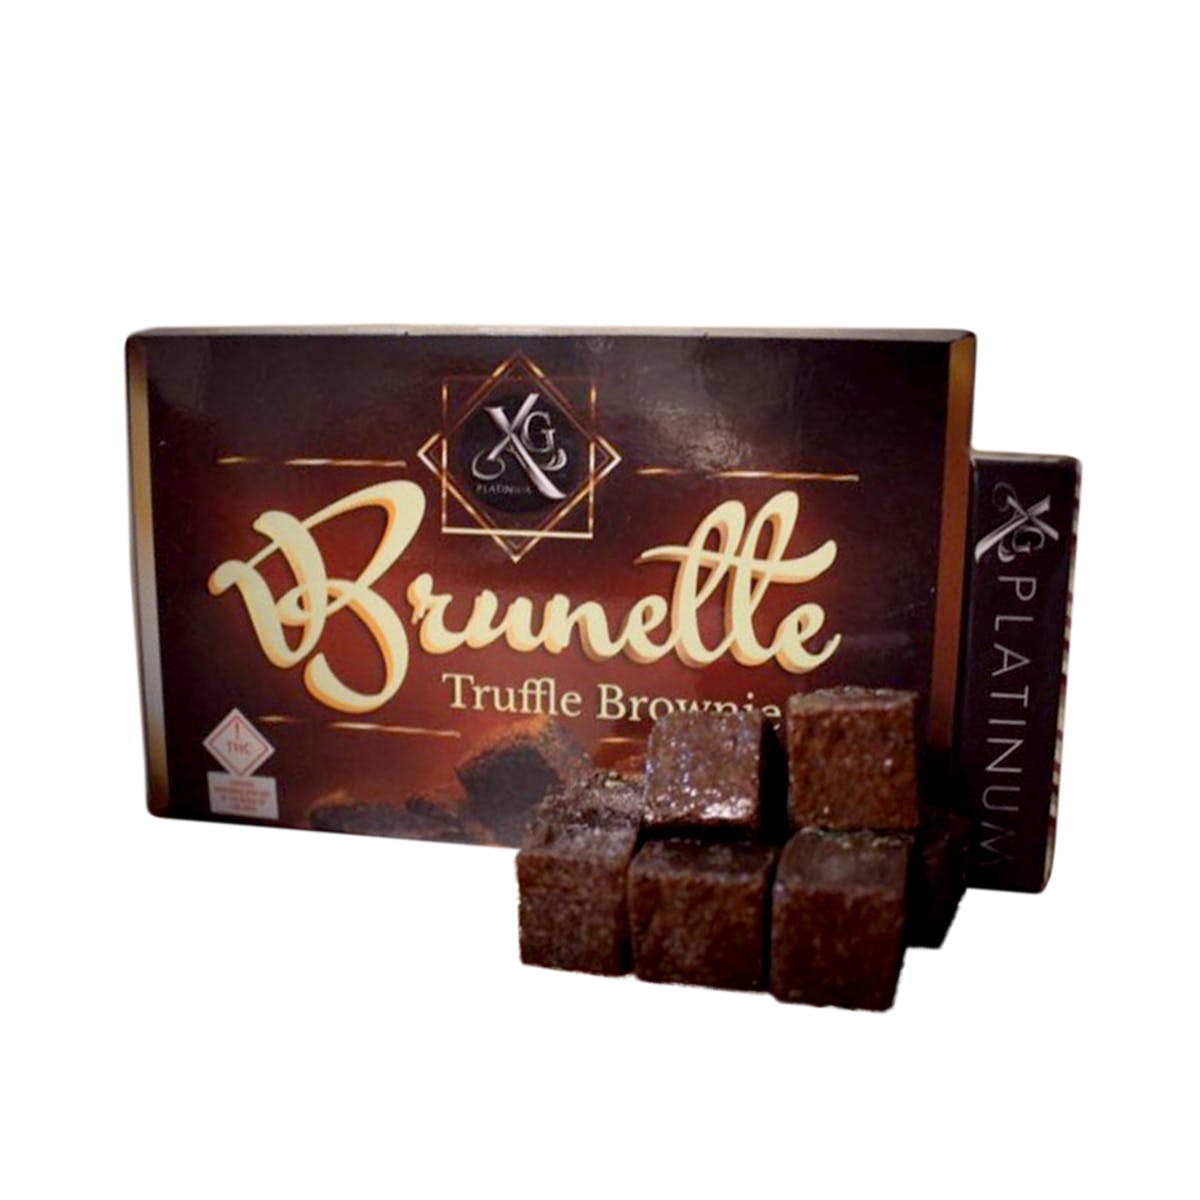 edible-xg-platinum-brunette-truffle-brownies-100mg